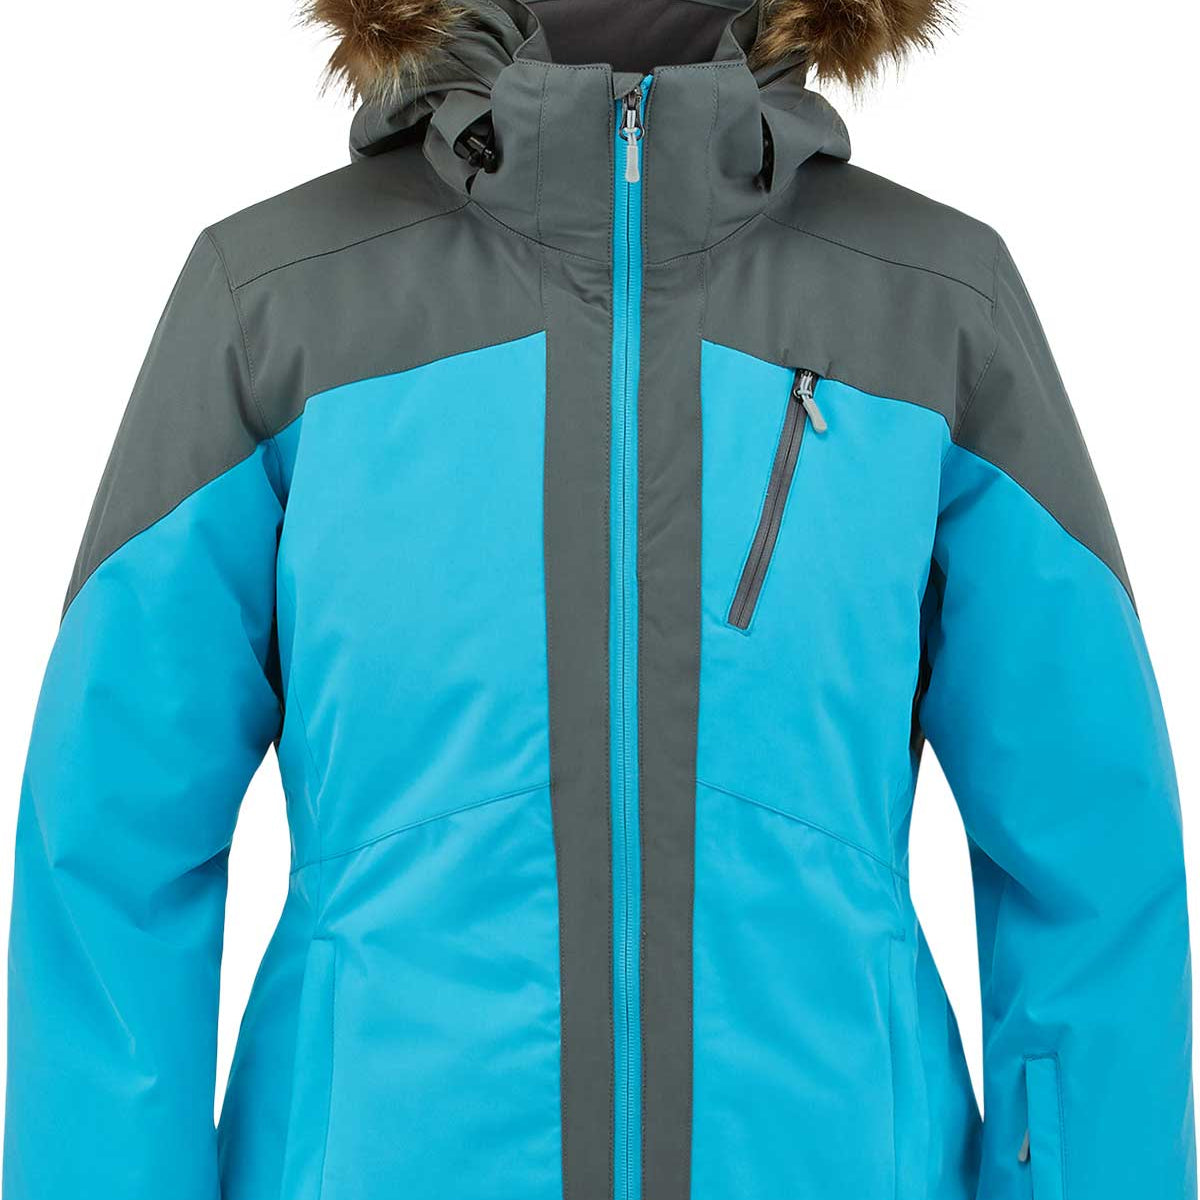 Spyder Active Sports Women's Skyline Insulated Ski Jacket